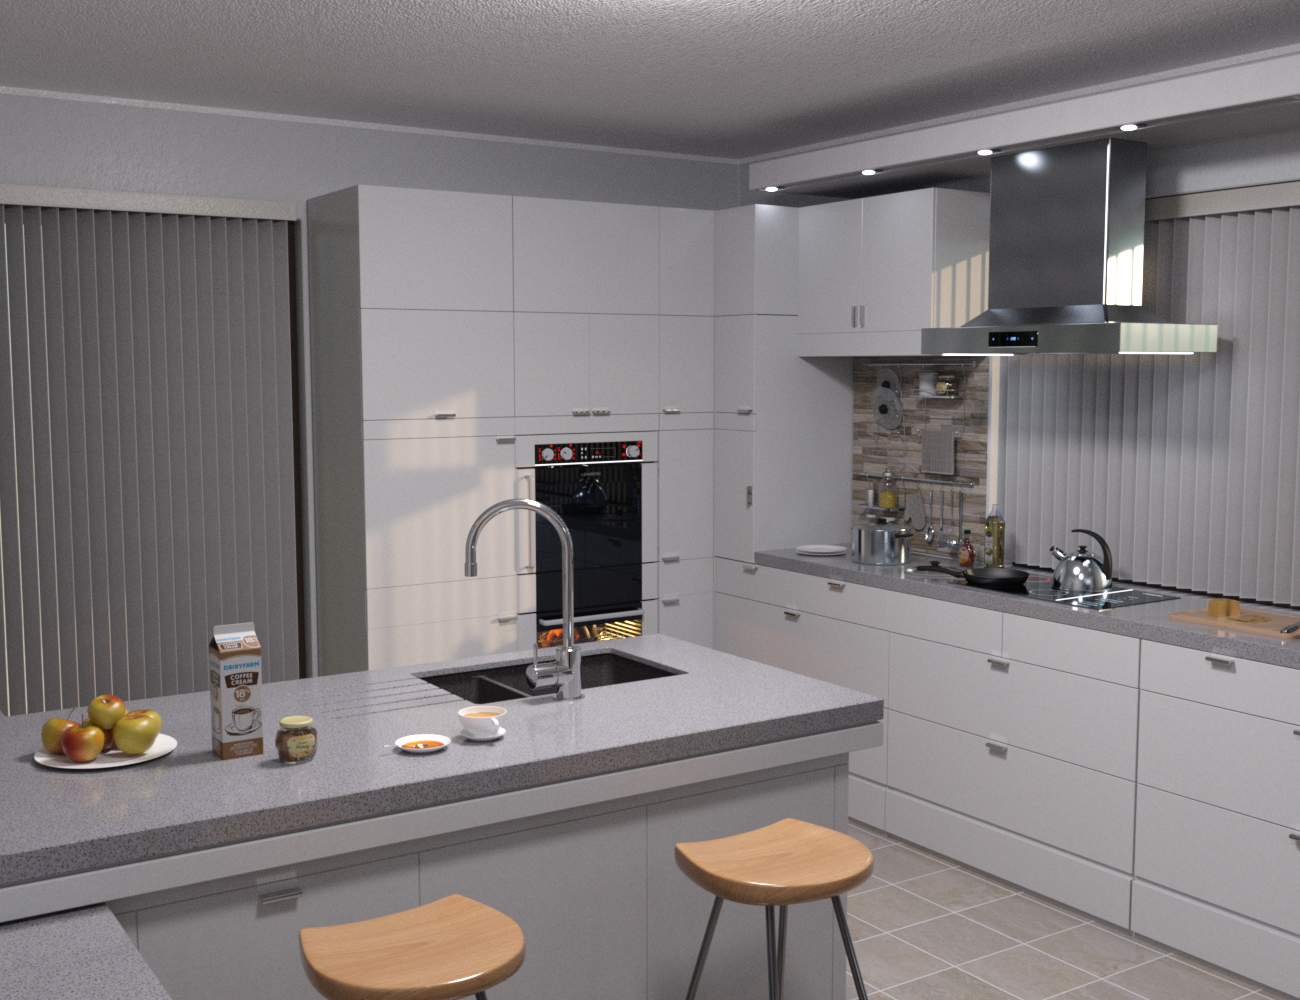 Modern House 2 Kitchen Food by: petipet, 3D Models by Daz 3D